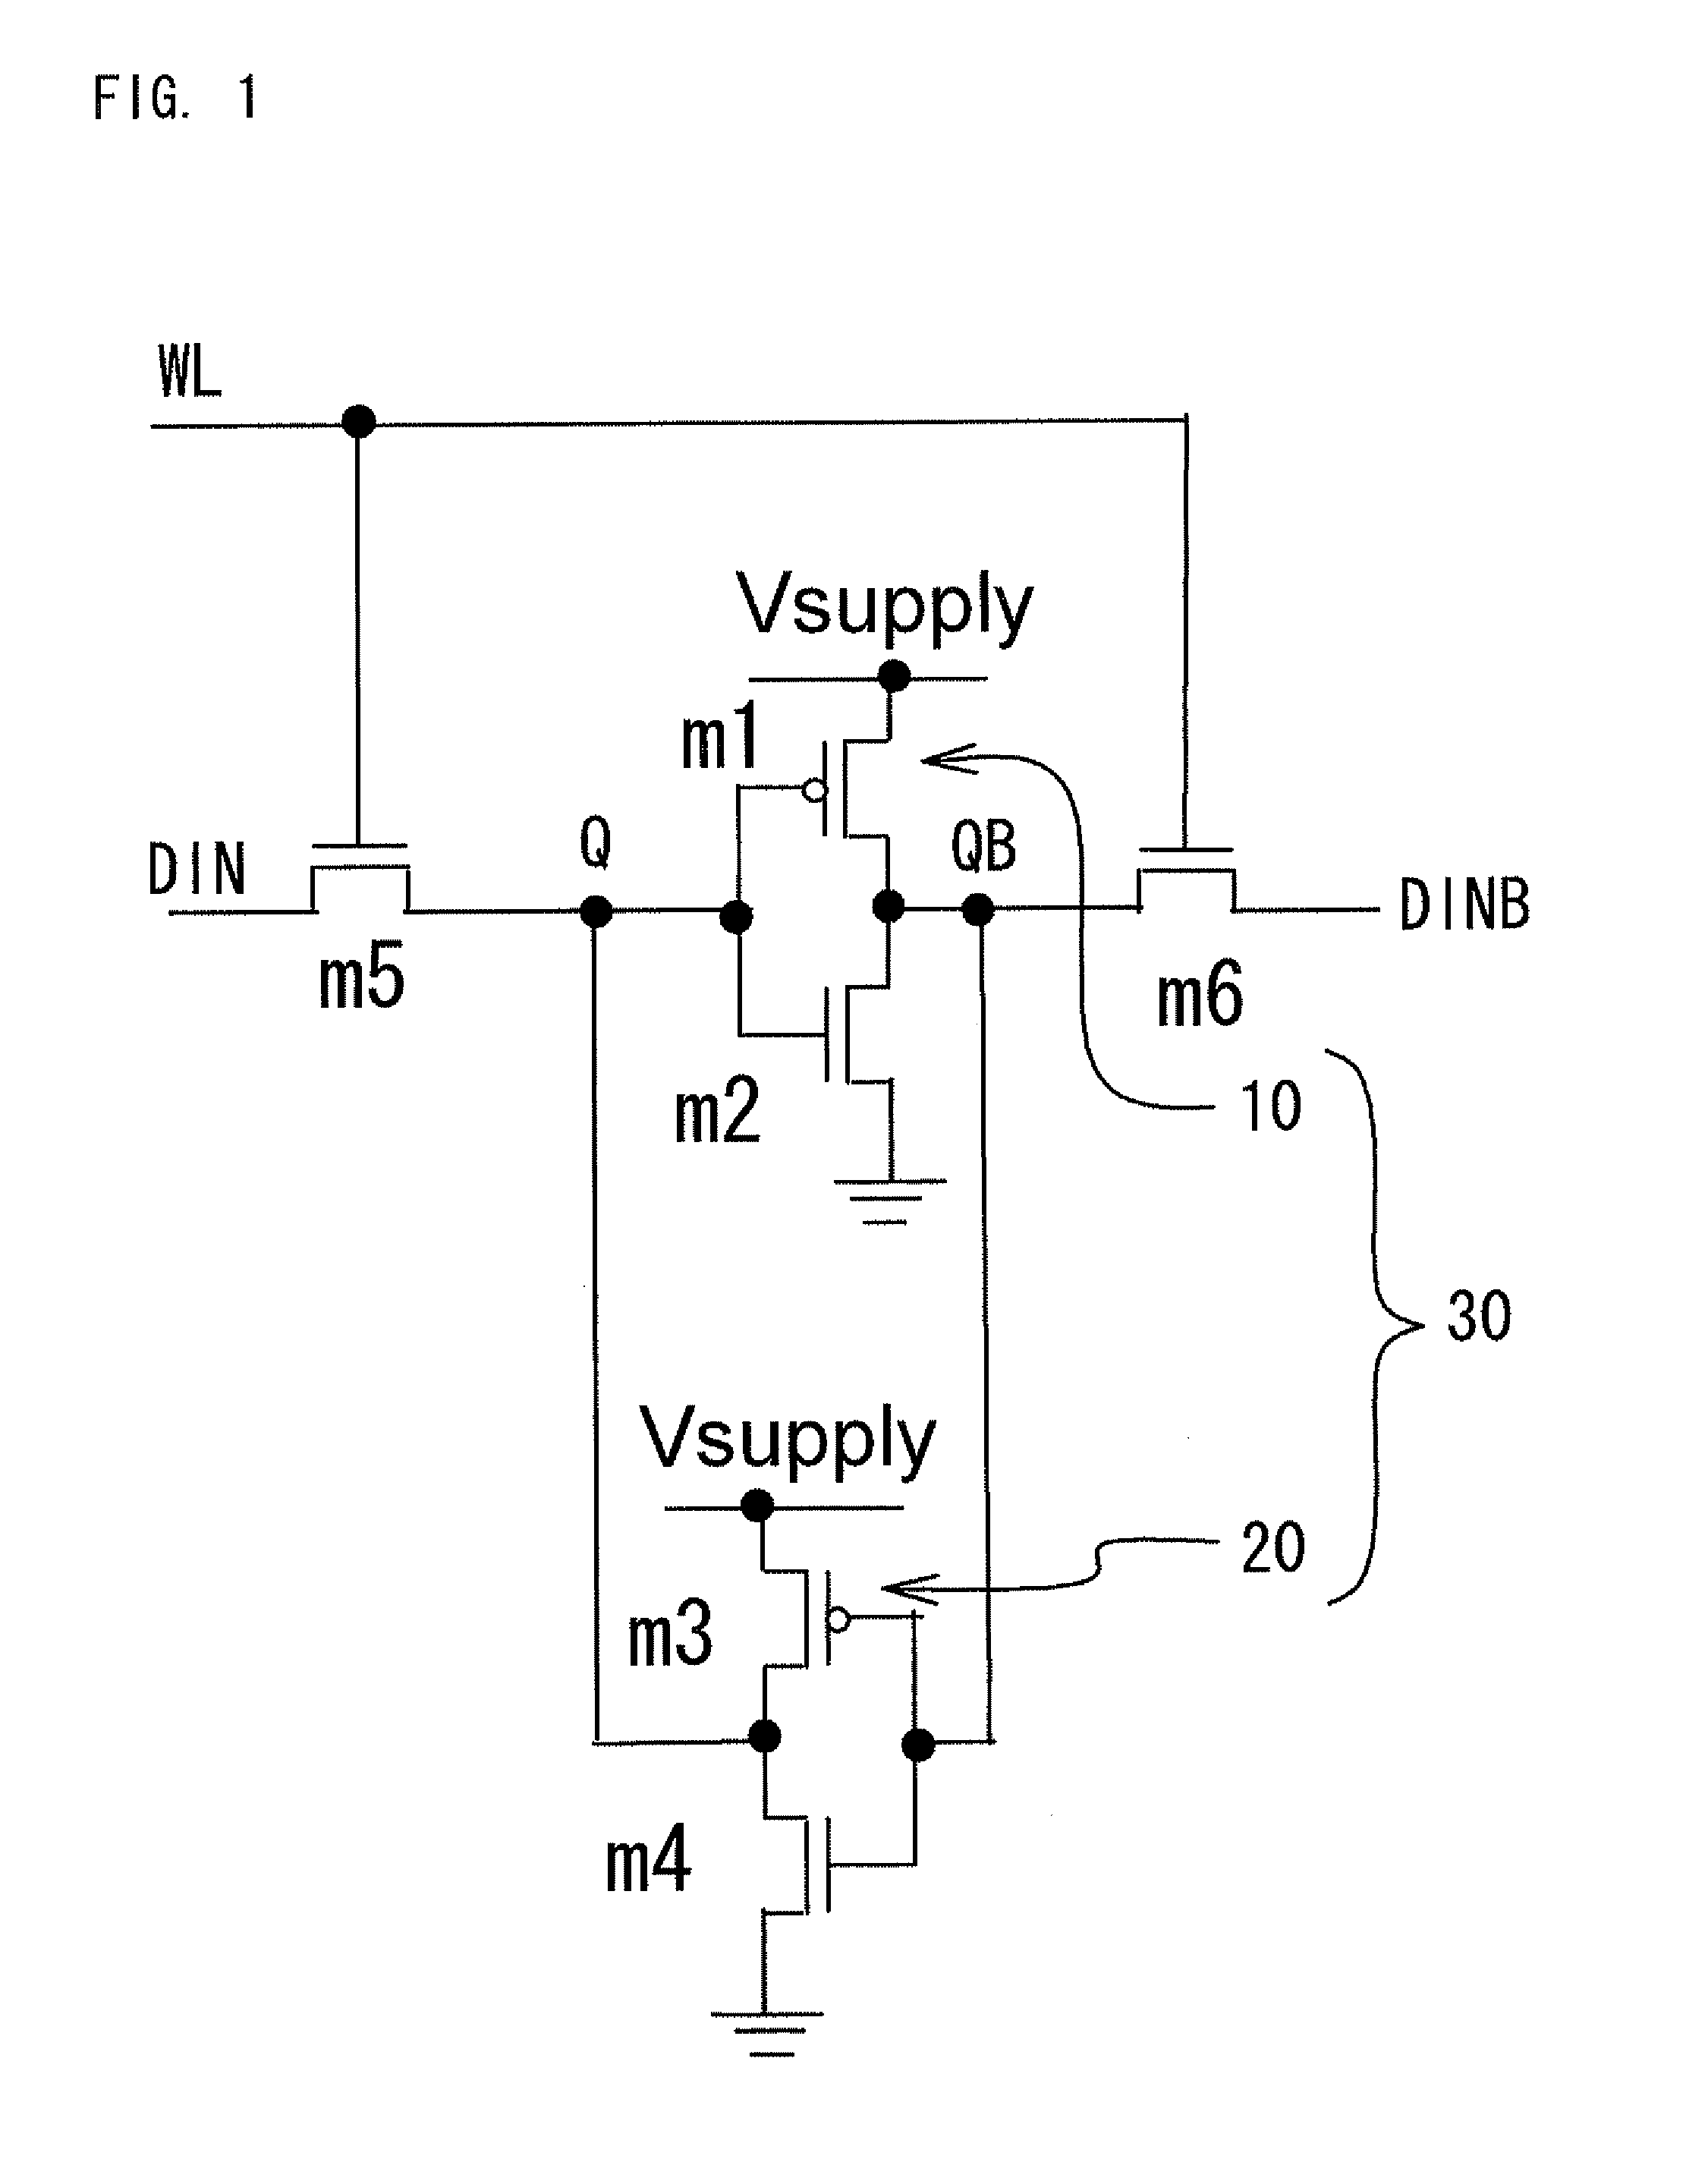 Nonvolatile SRAM/latch circuit using current-induced magnetization reversal MTJ